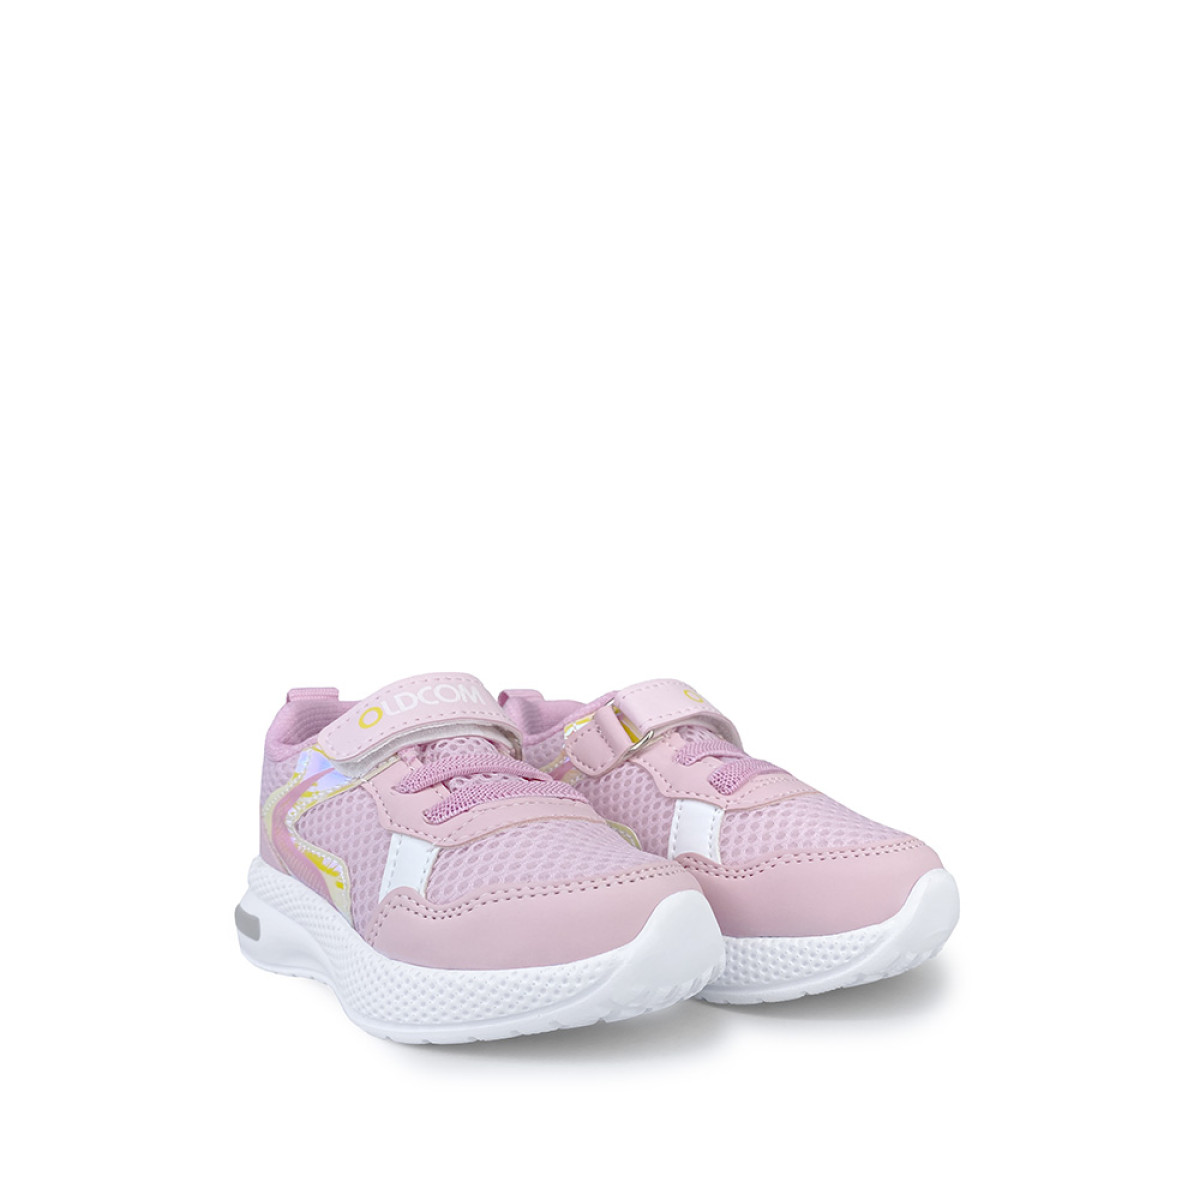 Kid's Sport Shoes SYDNEY, Pink